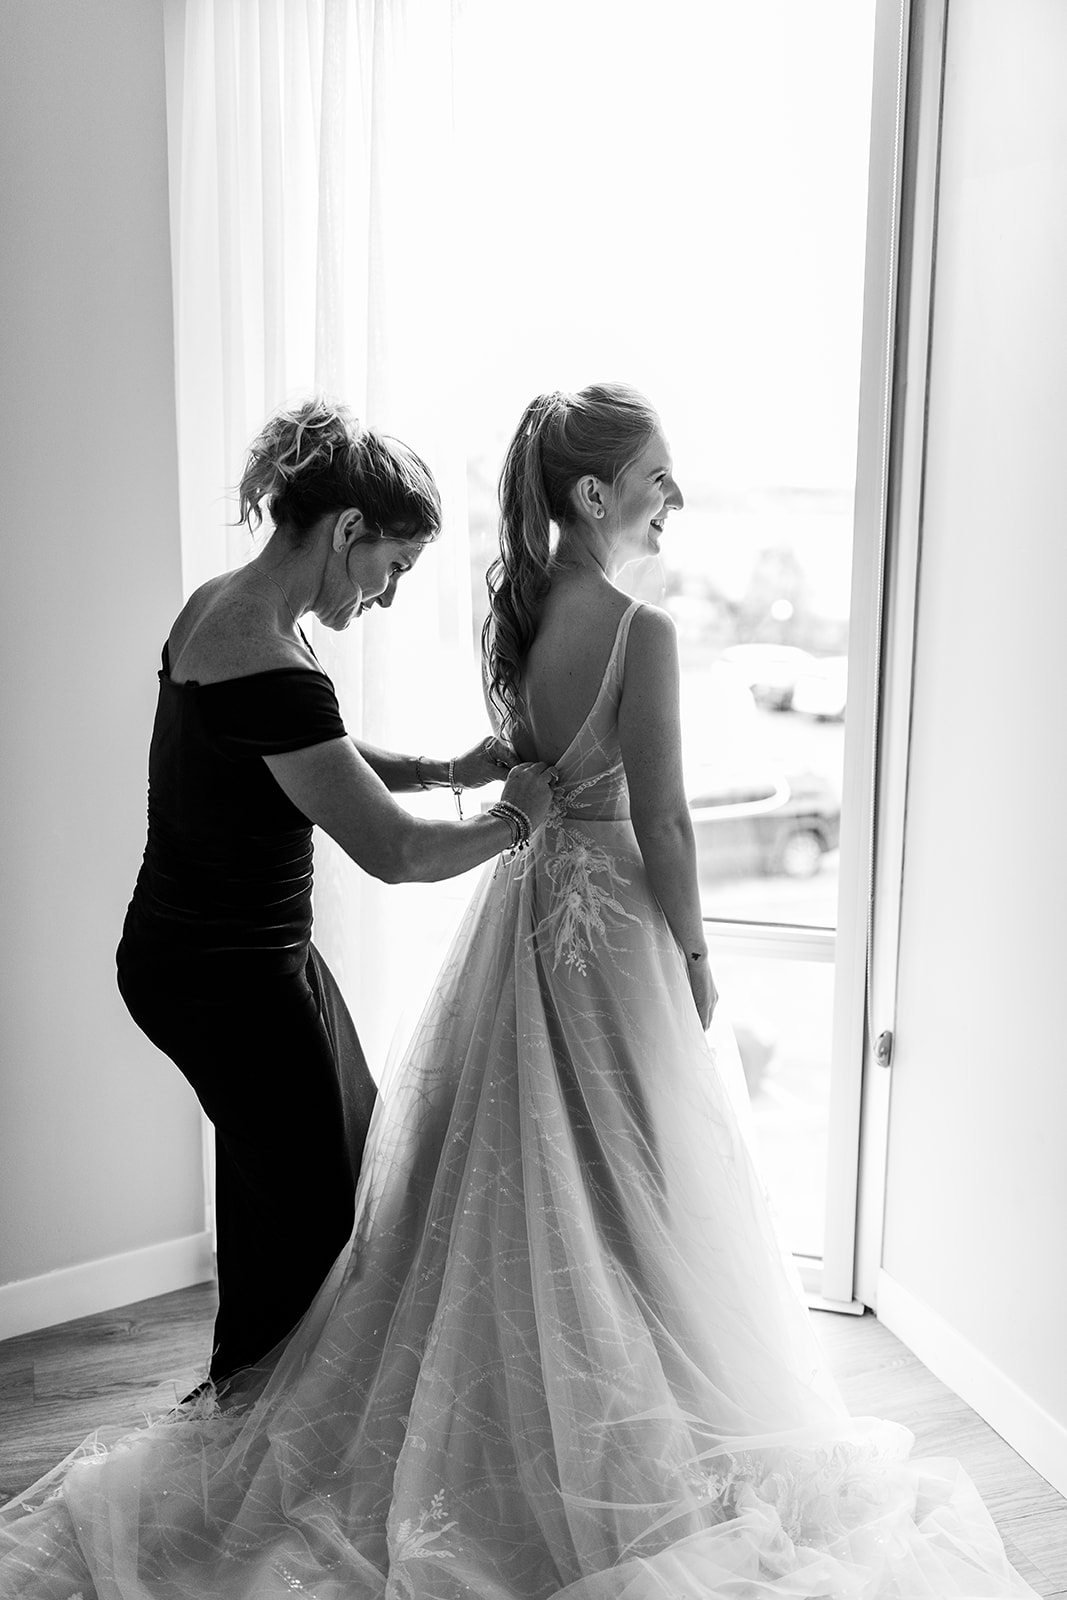 Mom helping bride put on wedding dress for Northern Michigan elopement